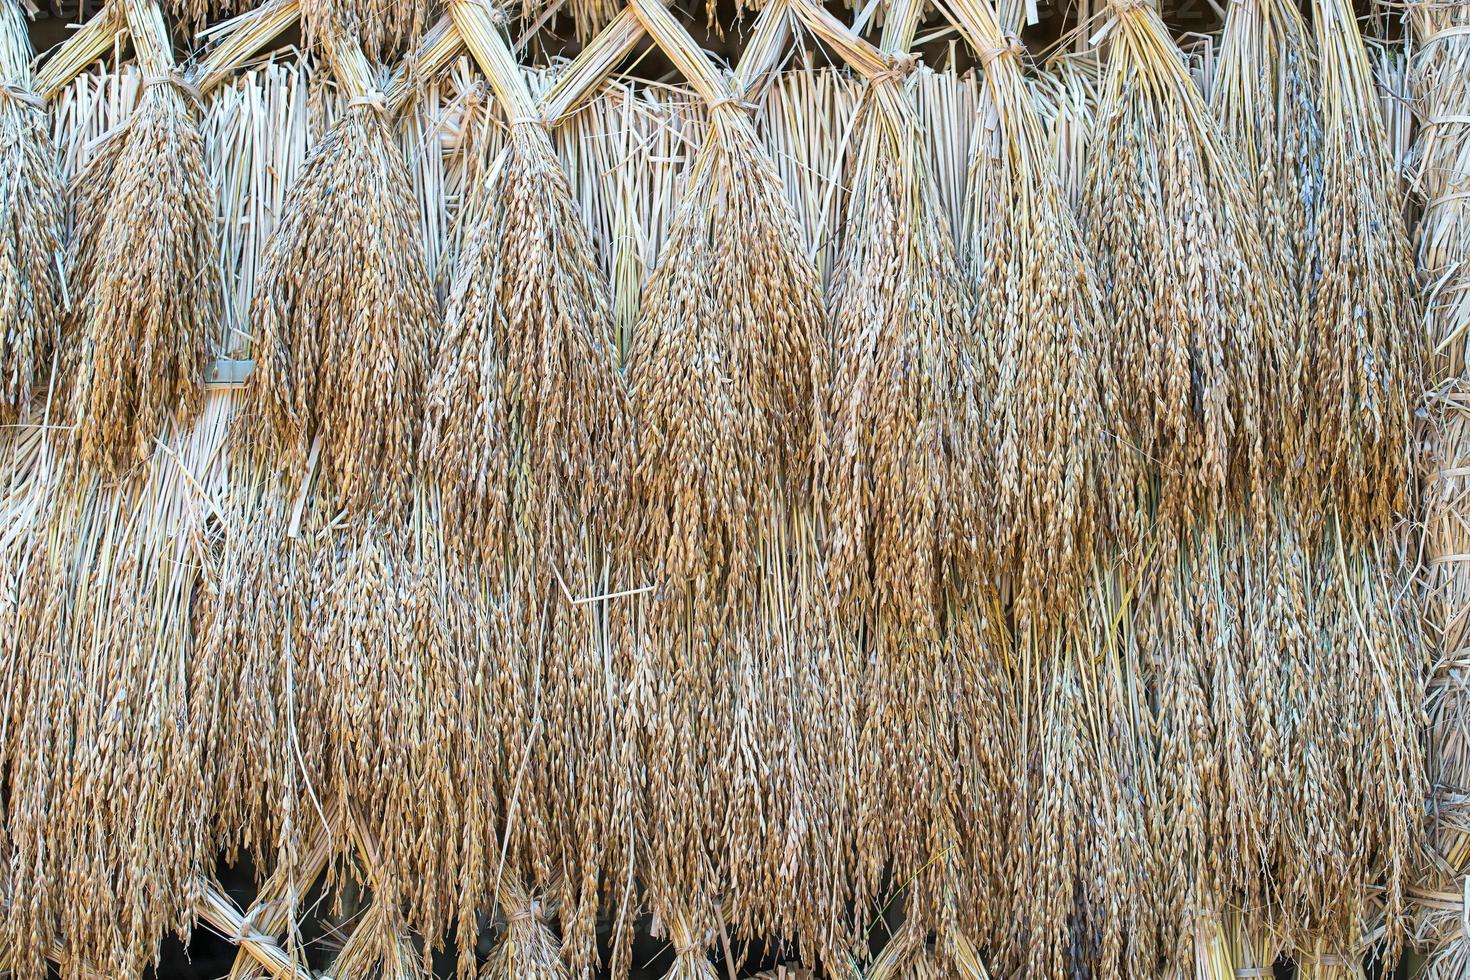 Dry paddy rice seeds photo